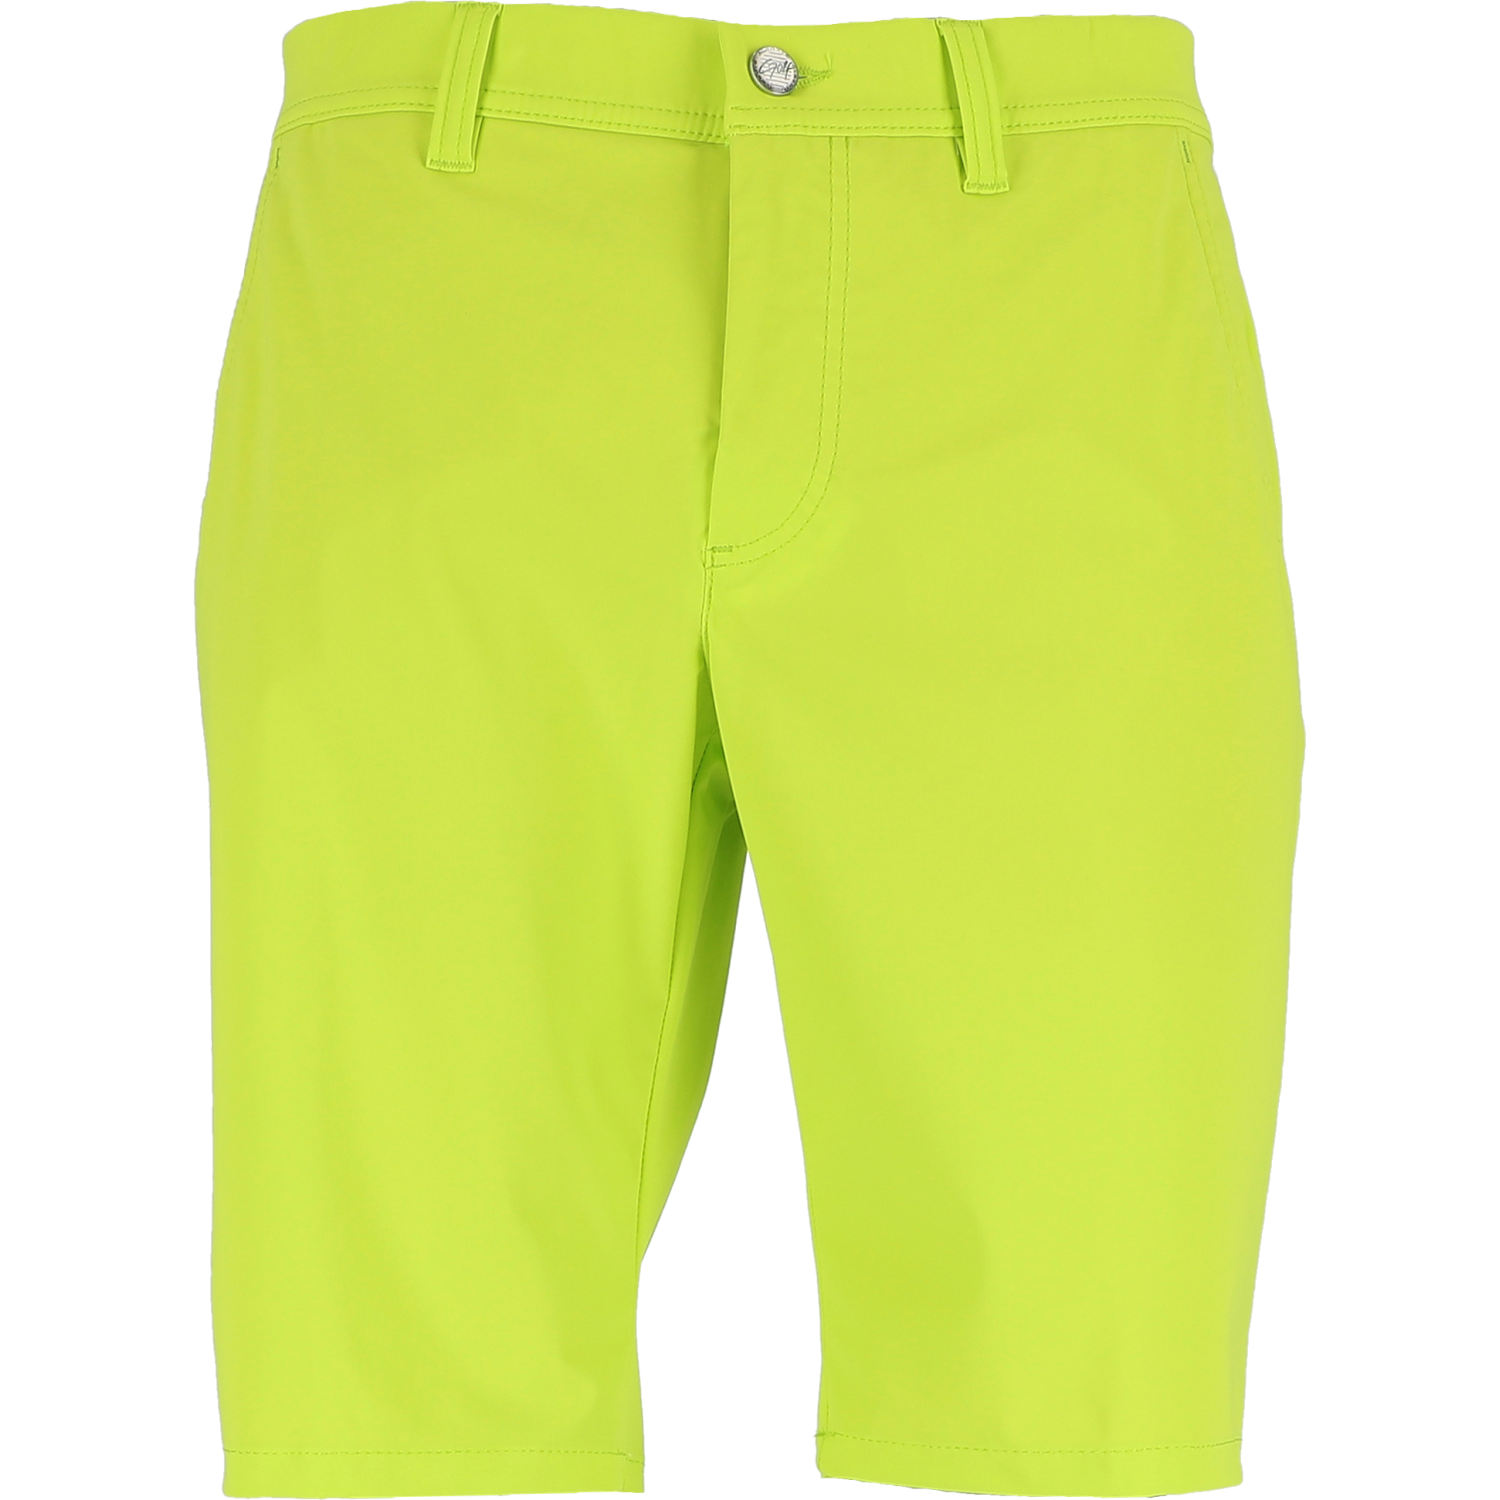 Alberto Earnie Wr Revolutional Shorts Green